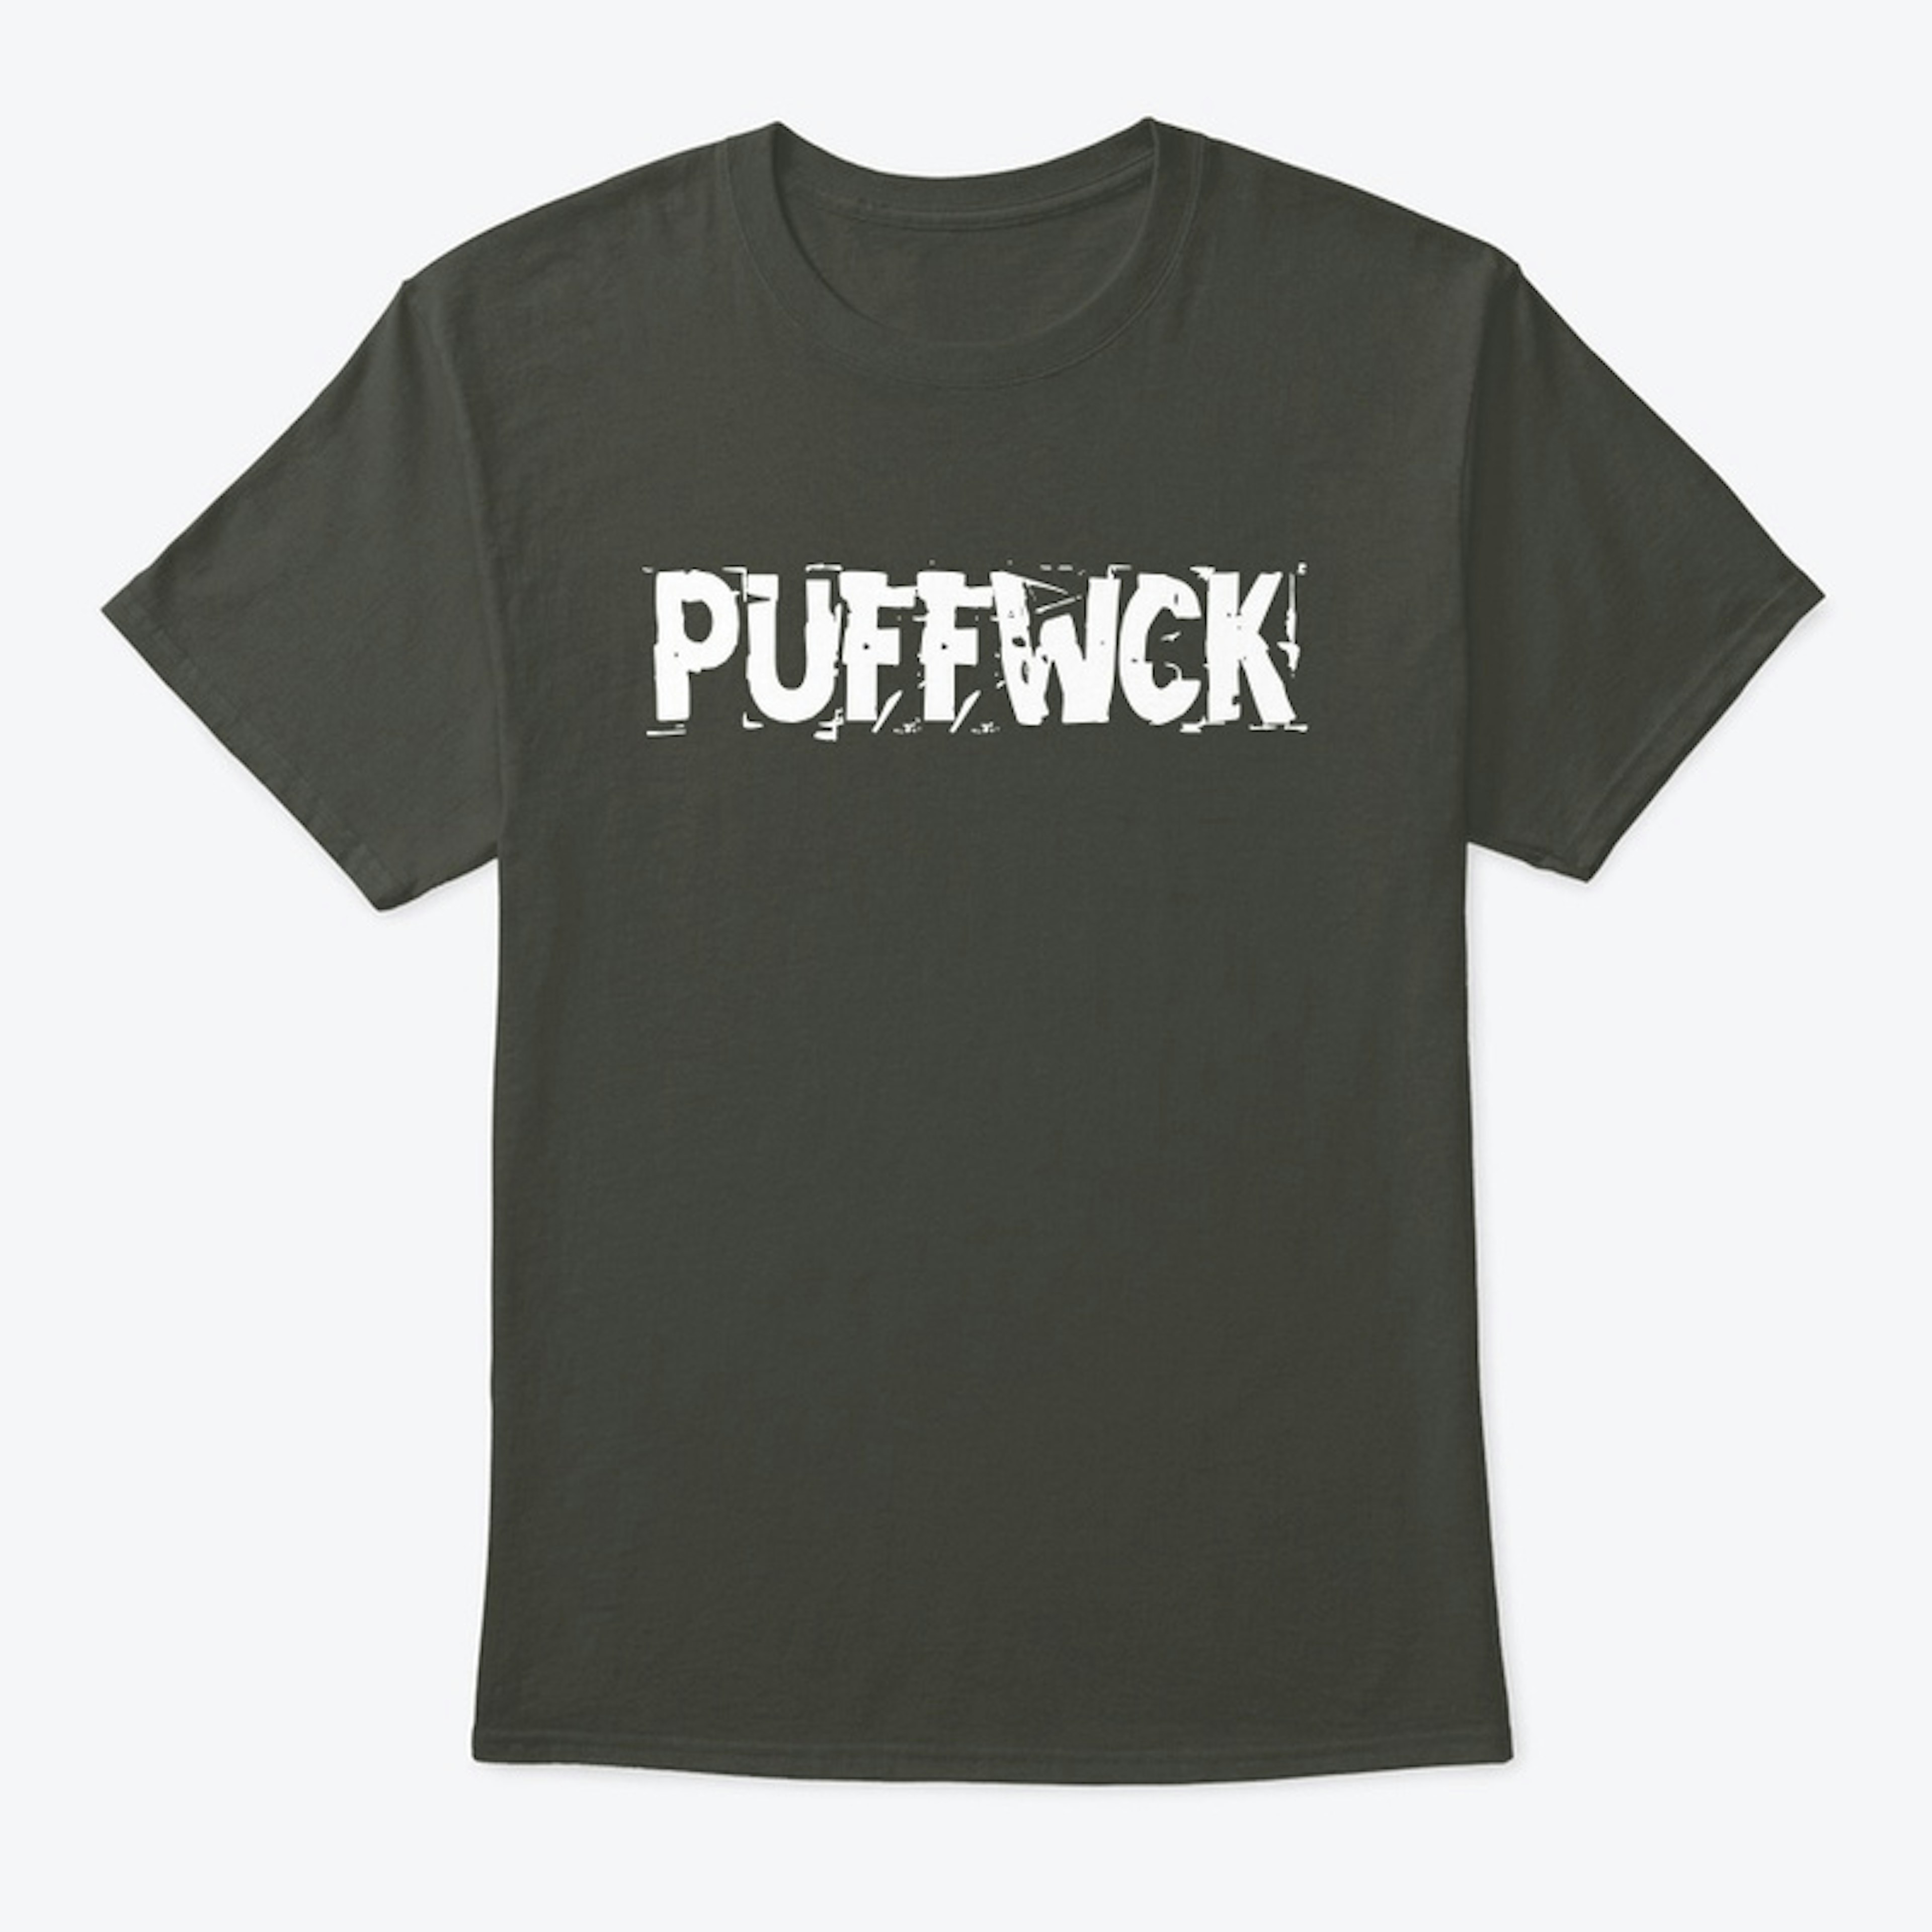  Puffwck - Holy Spirit Gifts Acronym